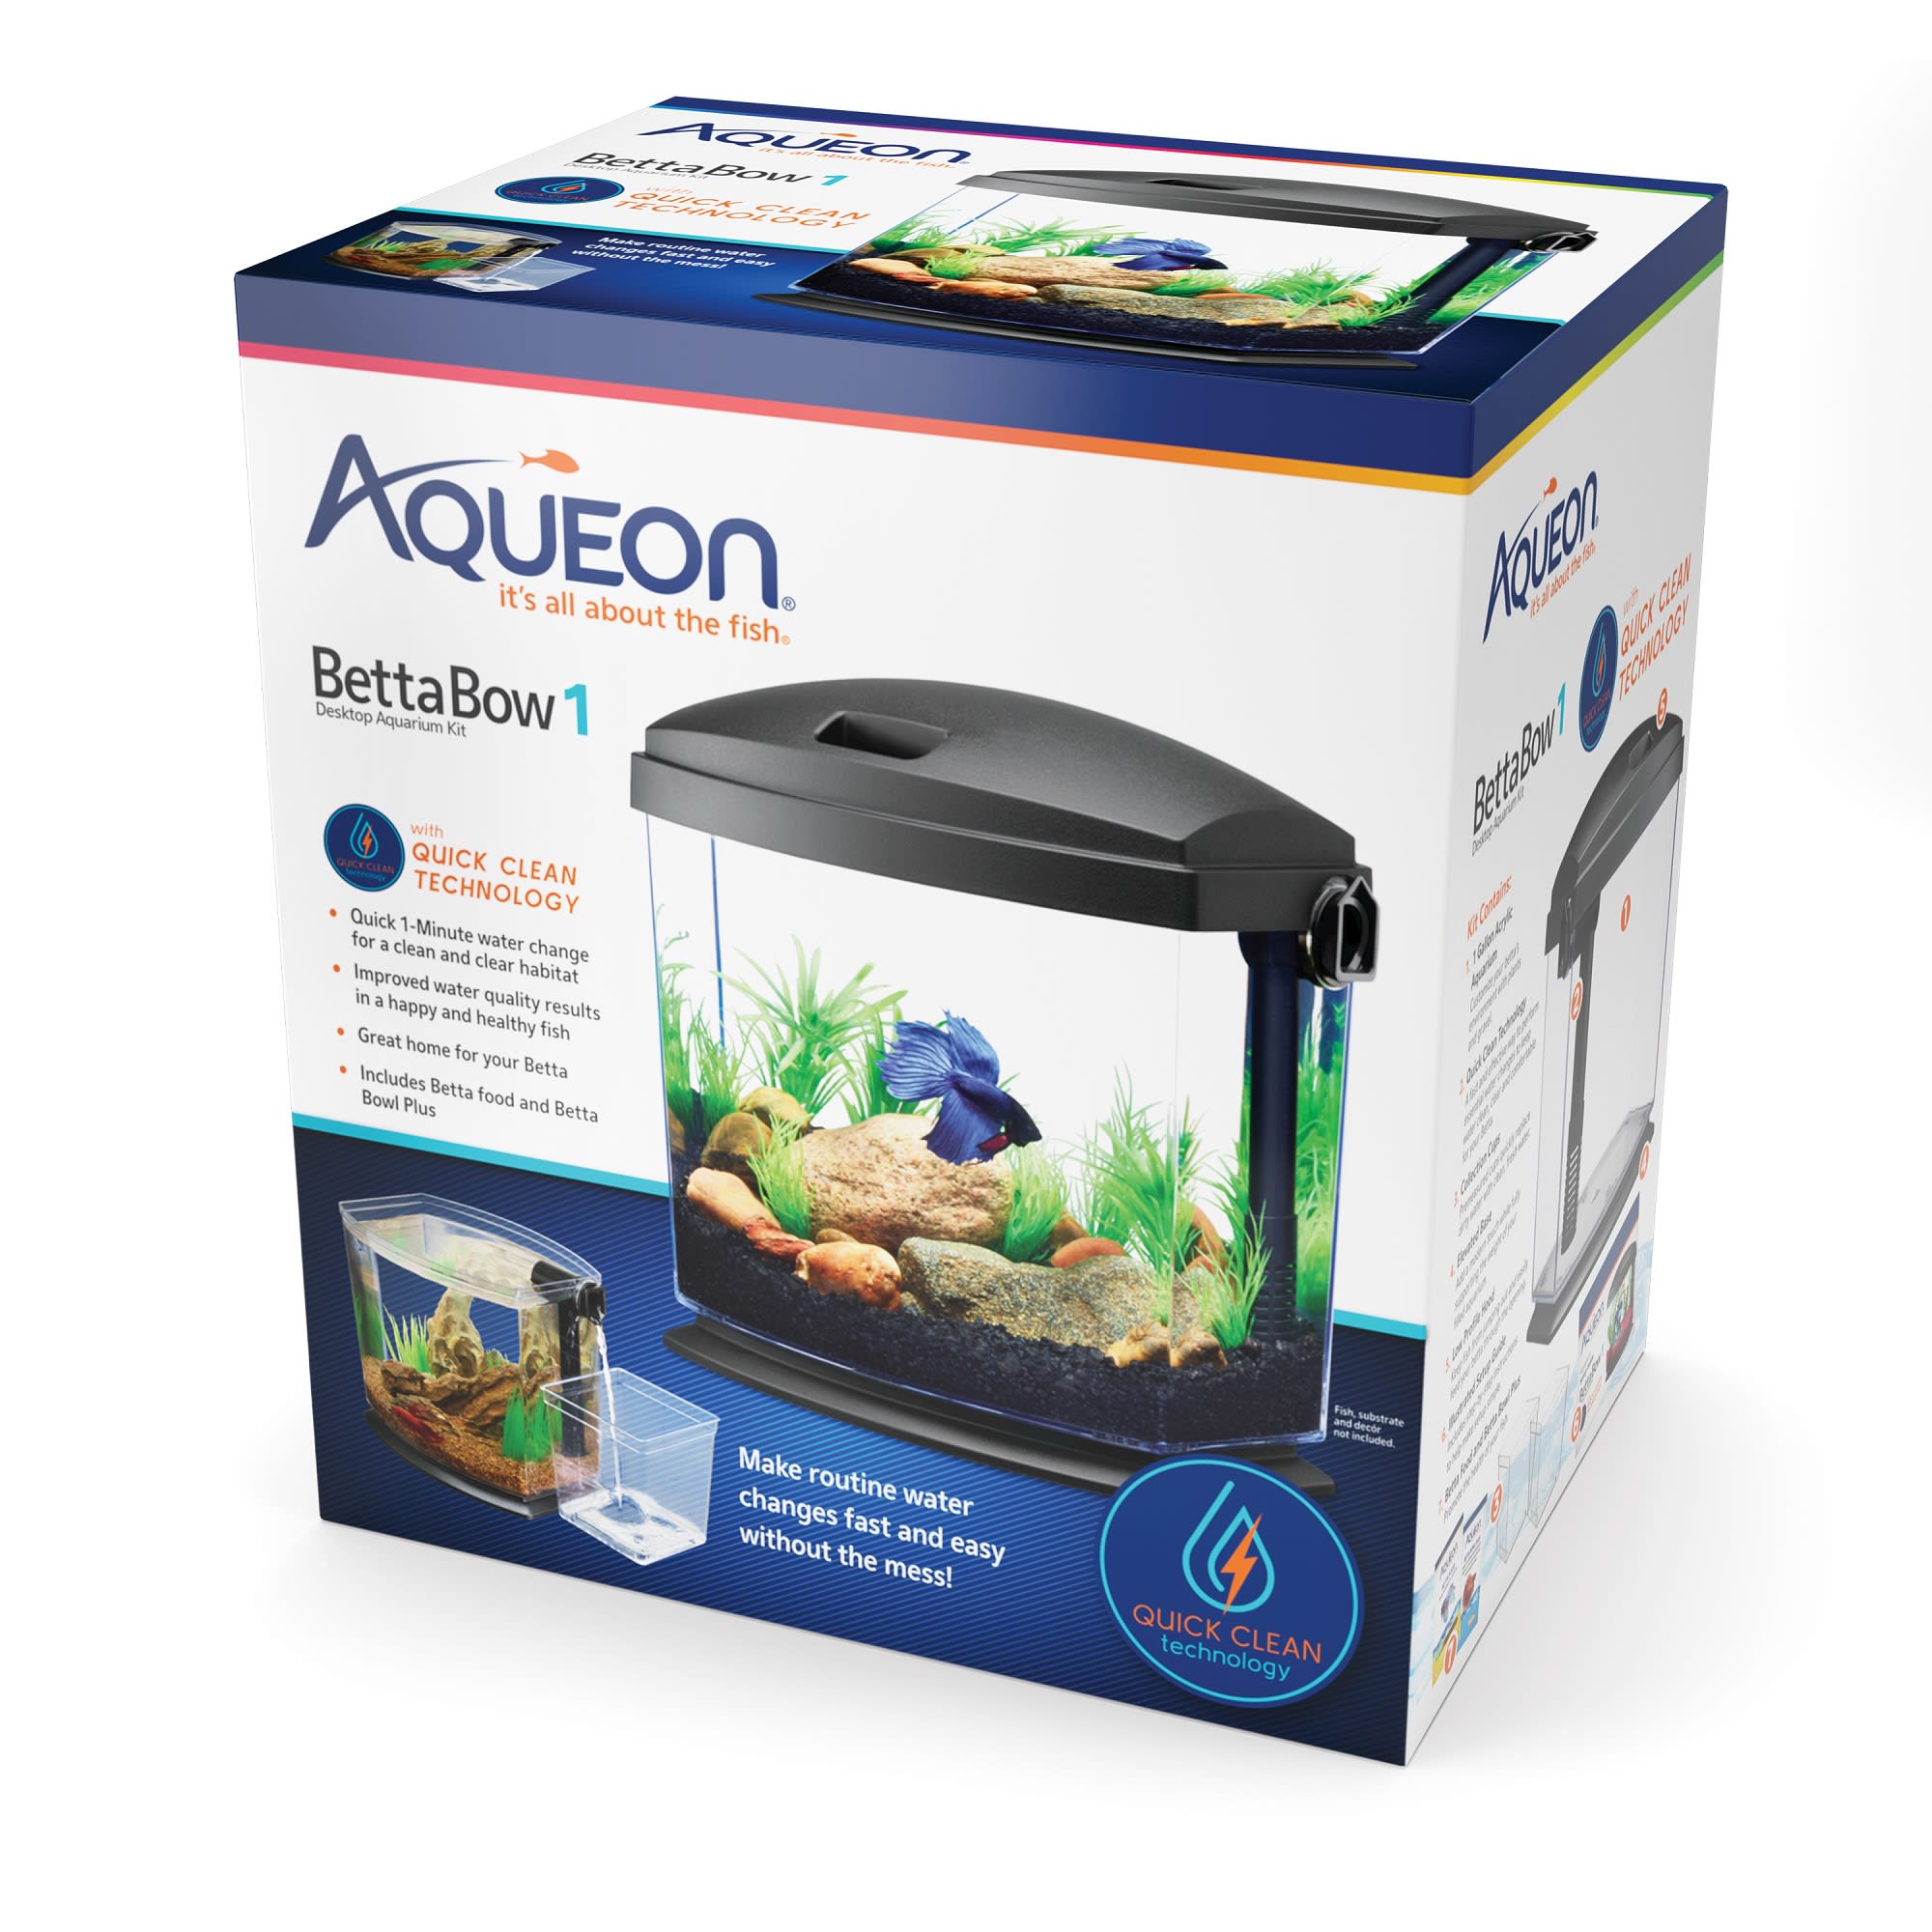 Aqueon BettaBow with Quick Clean Technology Aquarium Kit